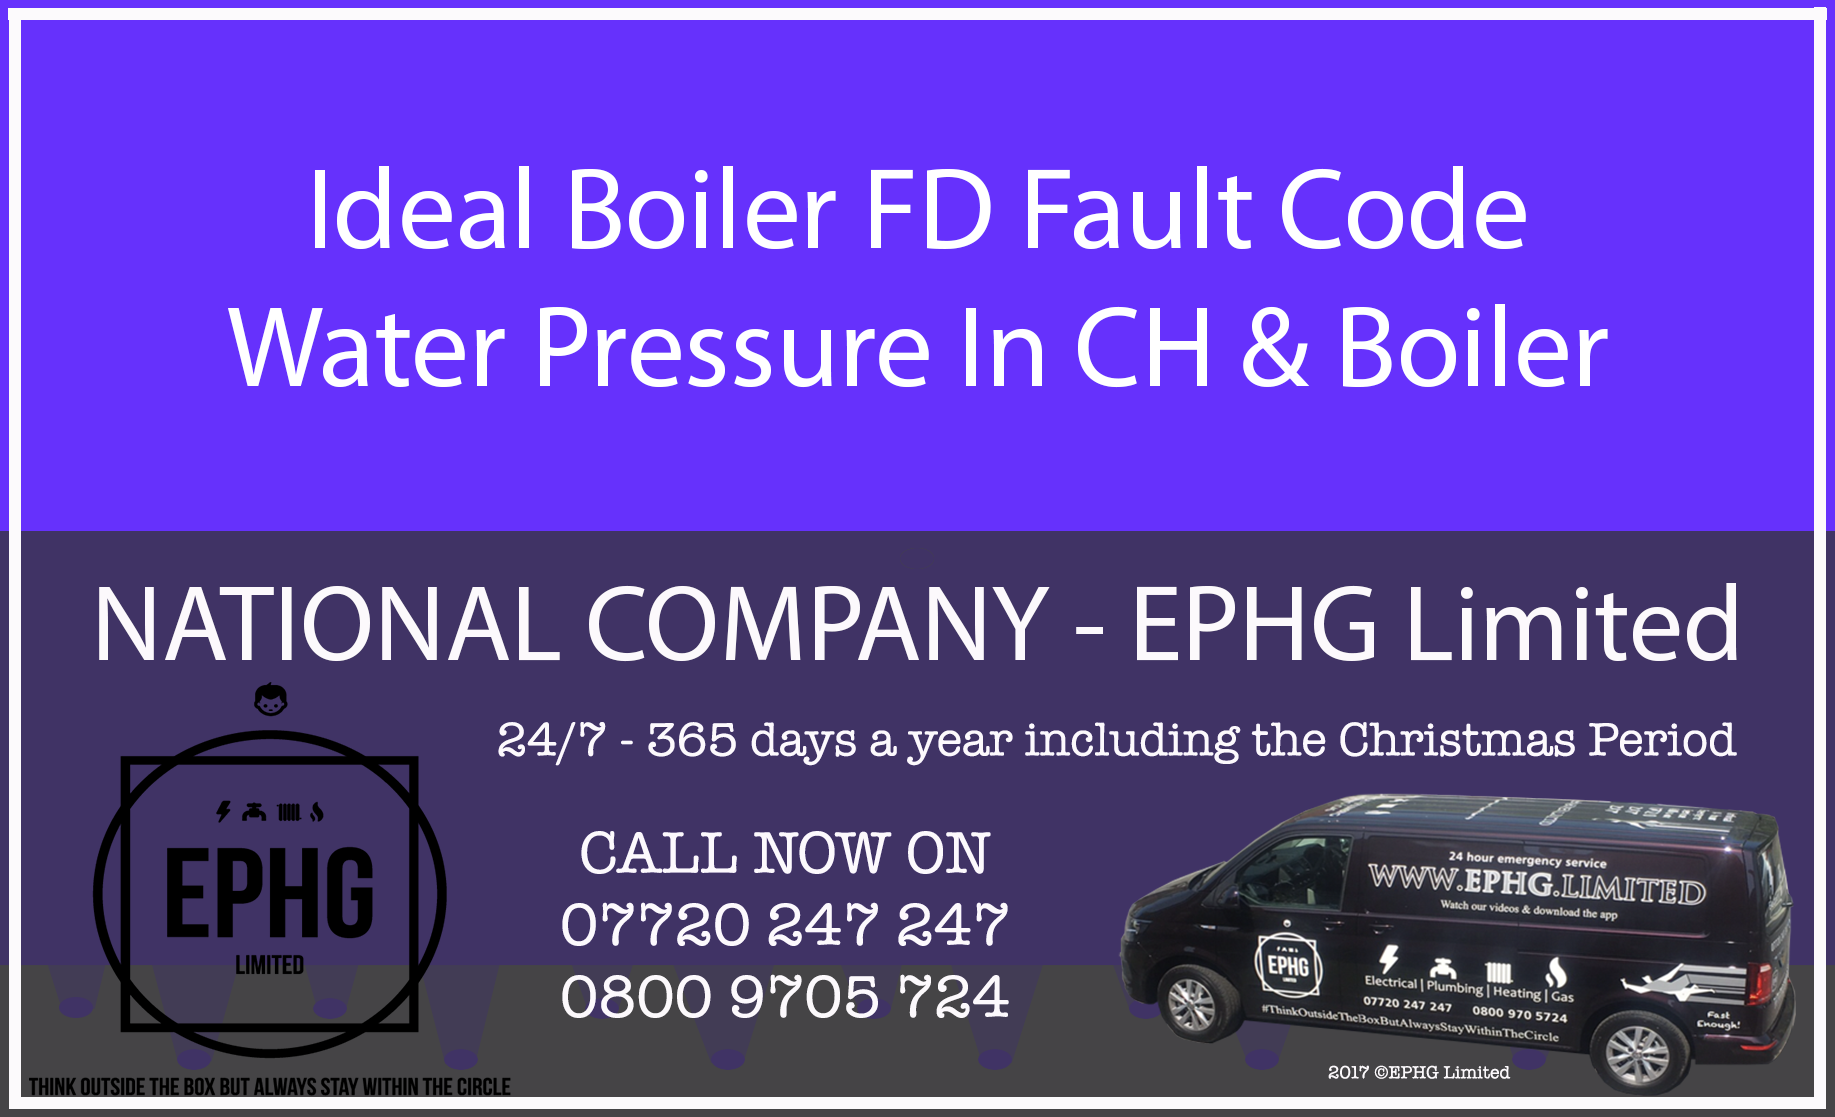 Ideal Boiler FD Fault Code